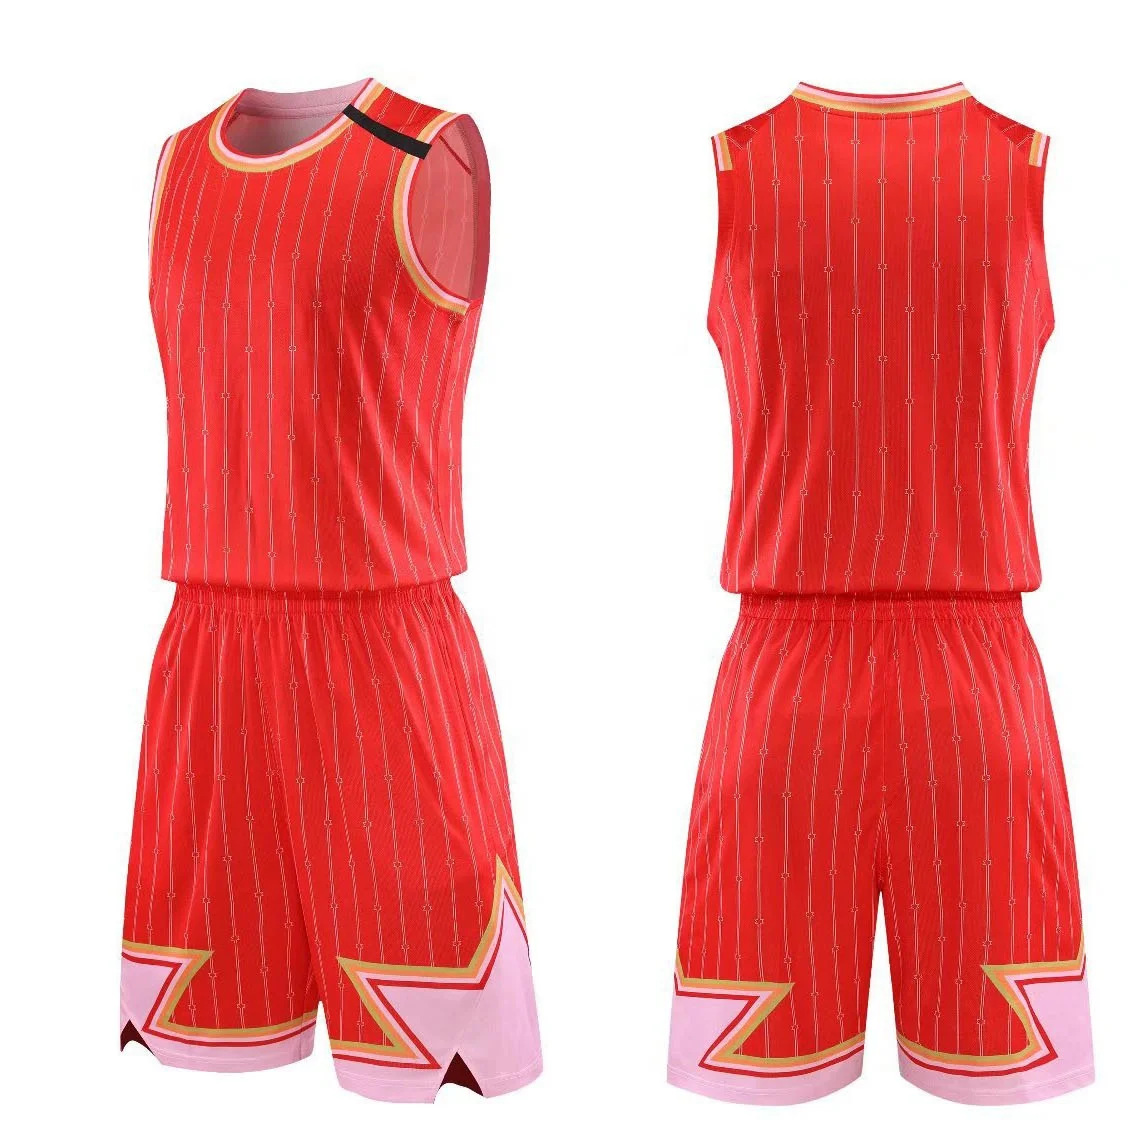 Plain Basketball Uniforms | vlr.eng.br